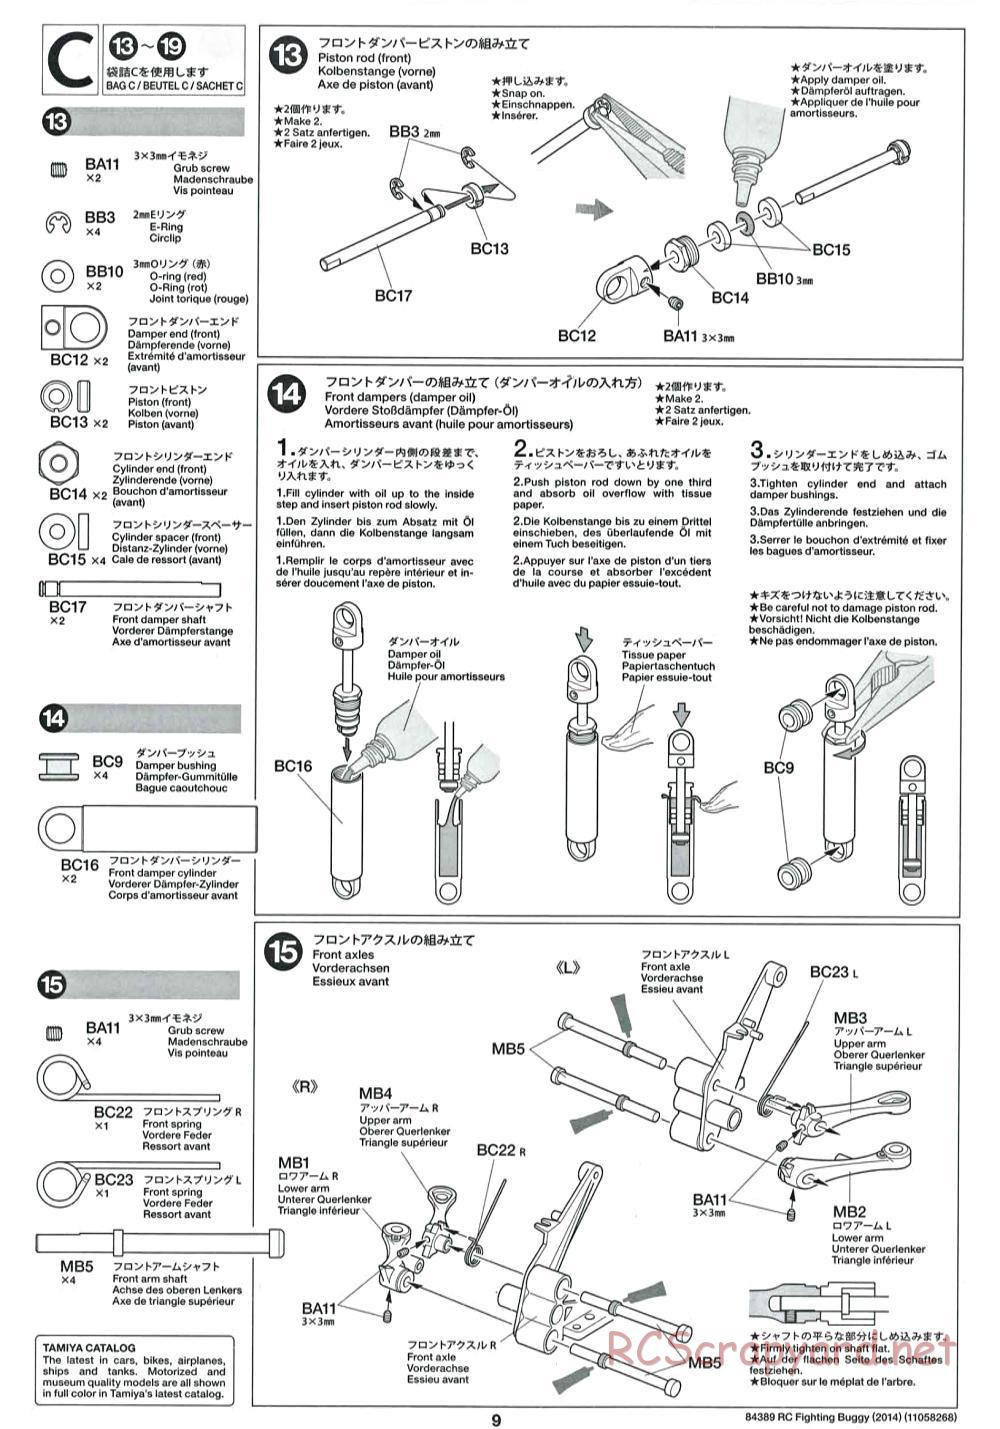 Tamiya - Fighting Buggy (2014) Chassis - Manual - Page 9